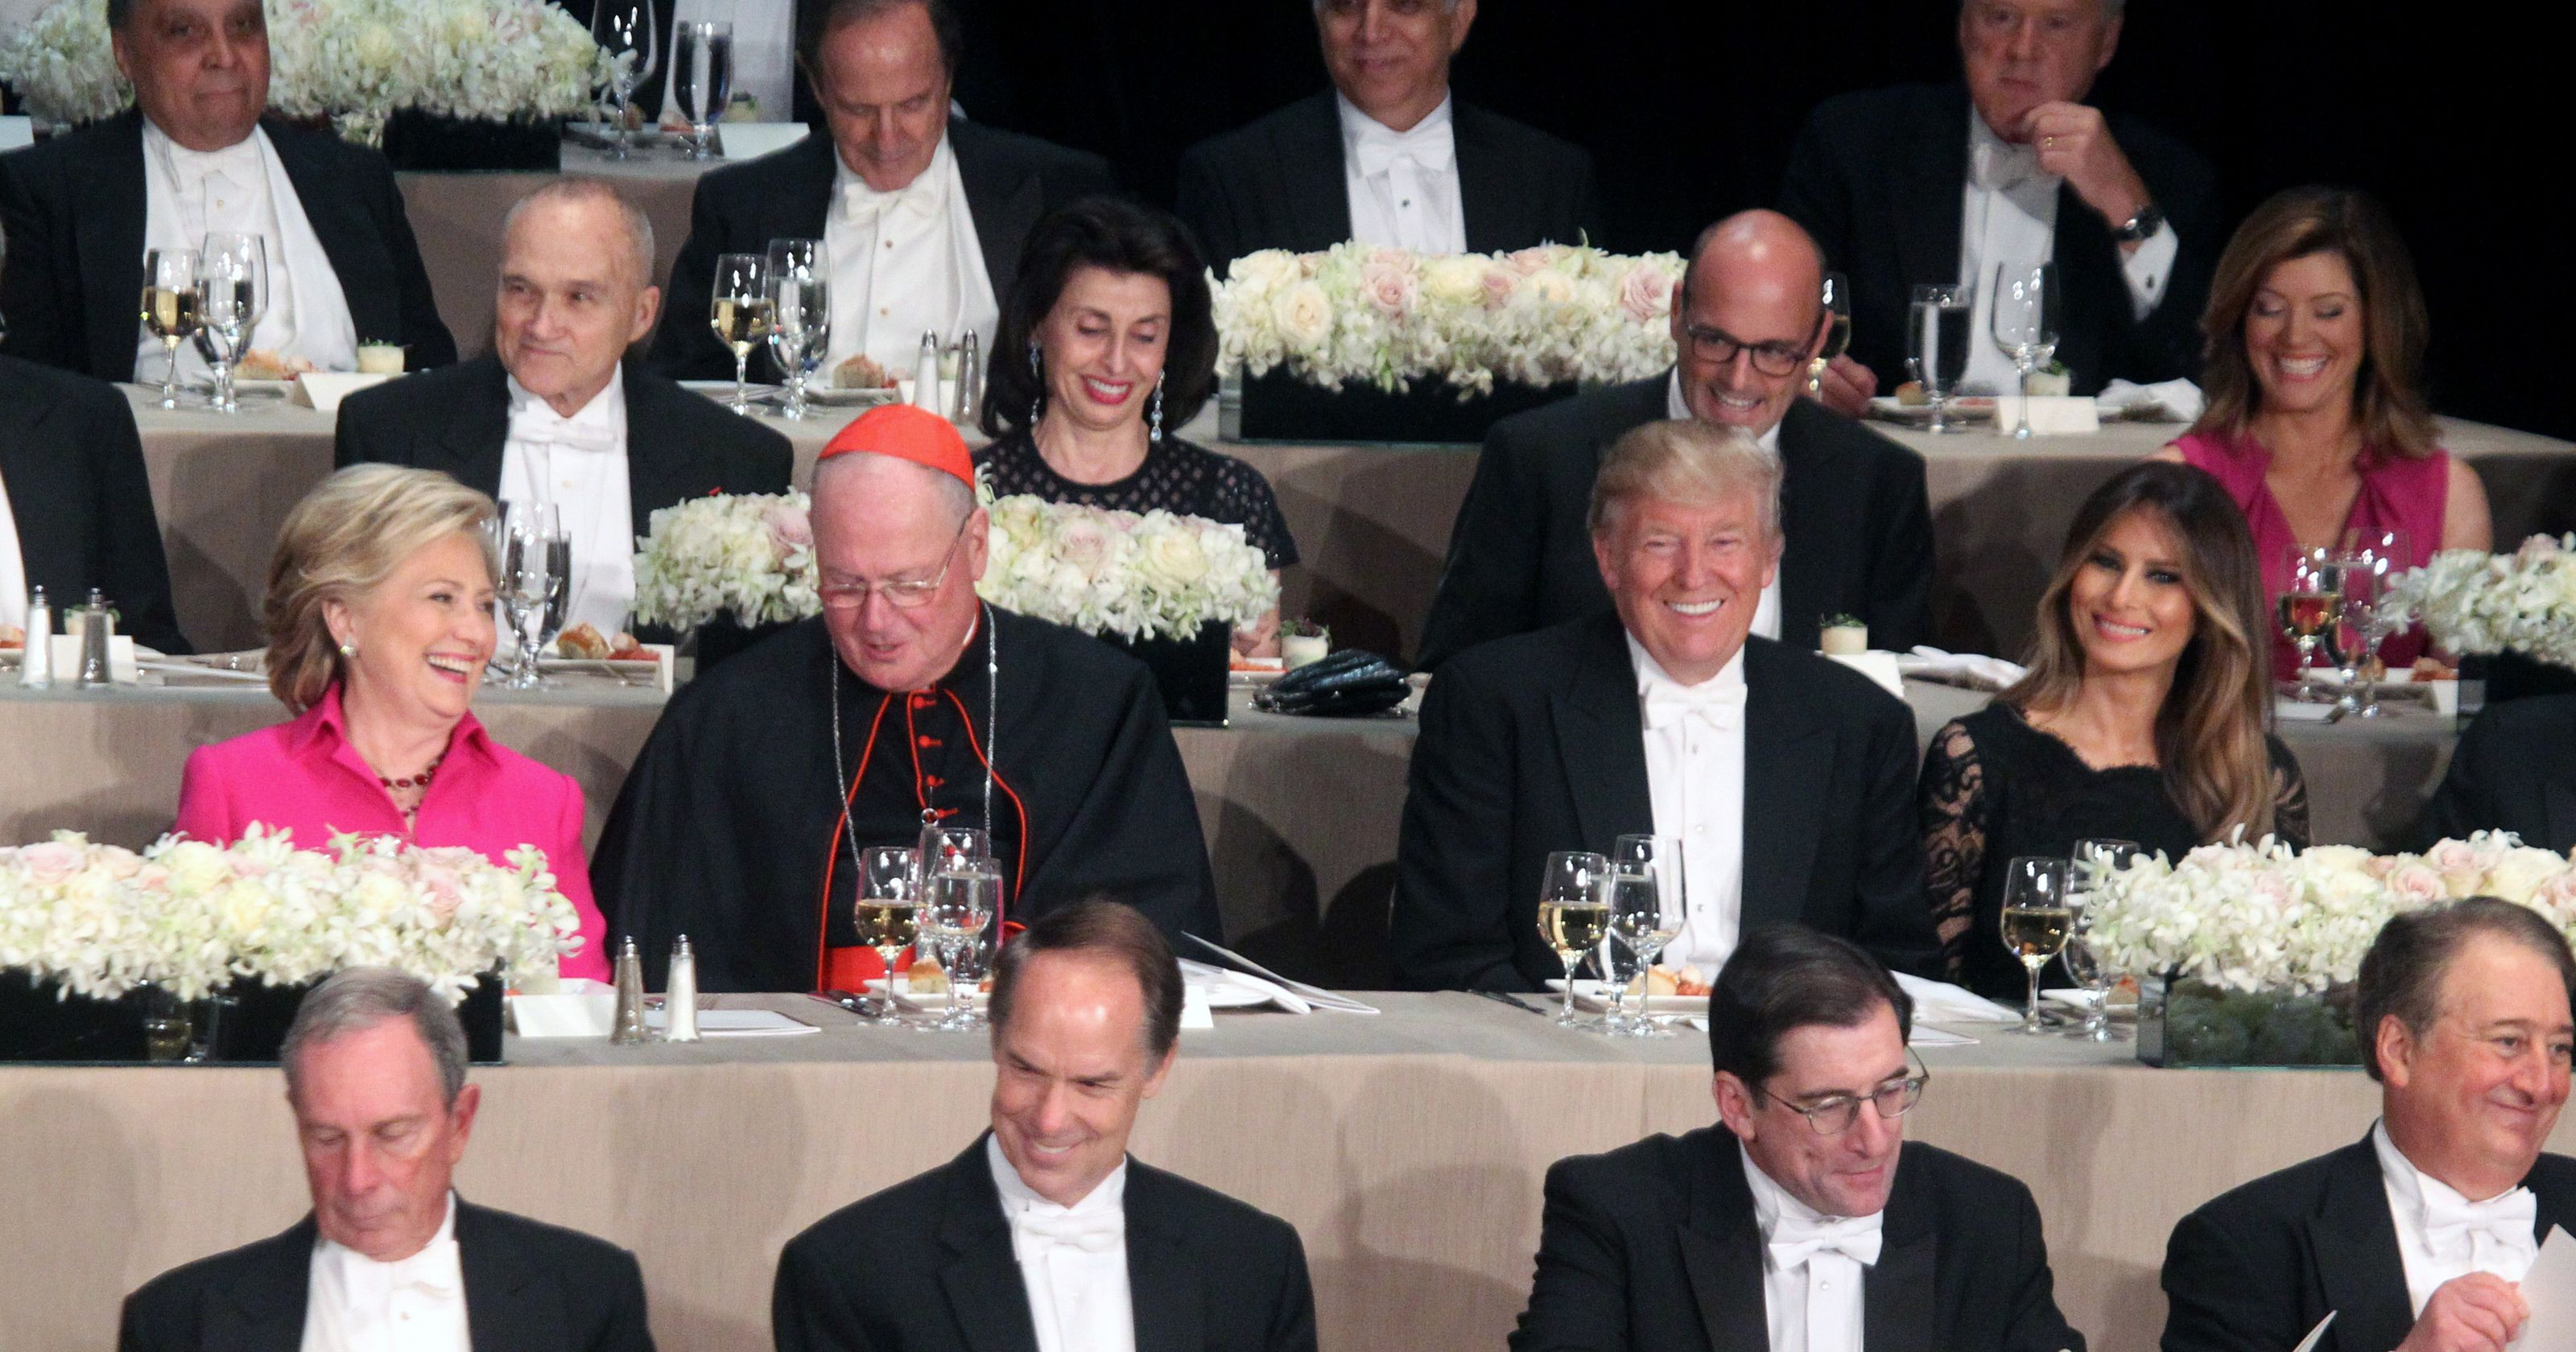 Al Smith Dinner
 Trump Clinton try for laughs at awkward Al Smith dinner